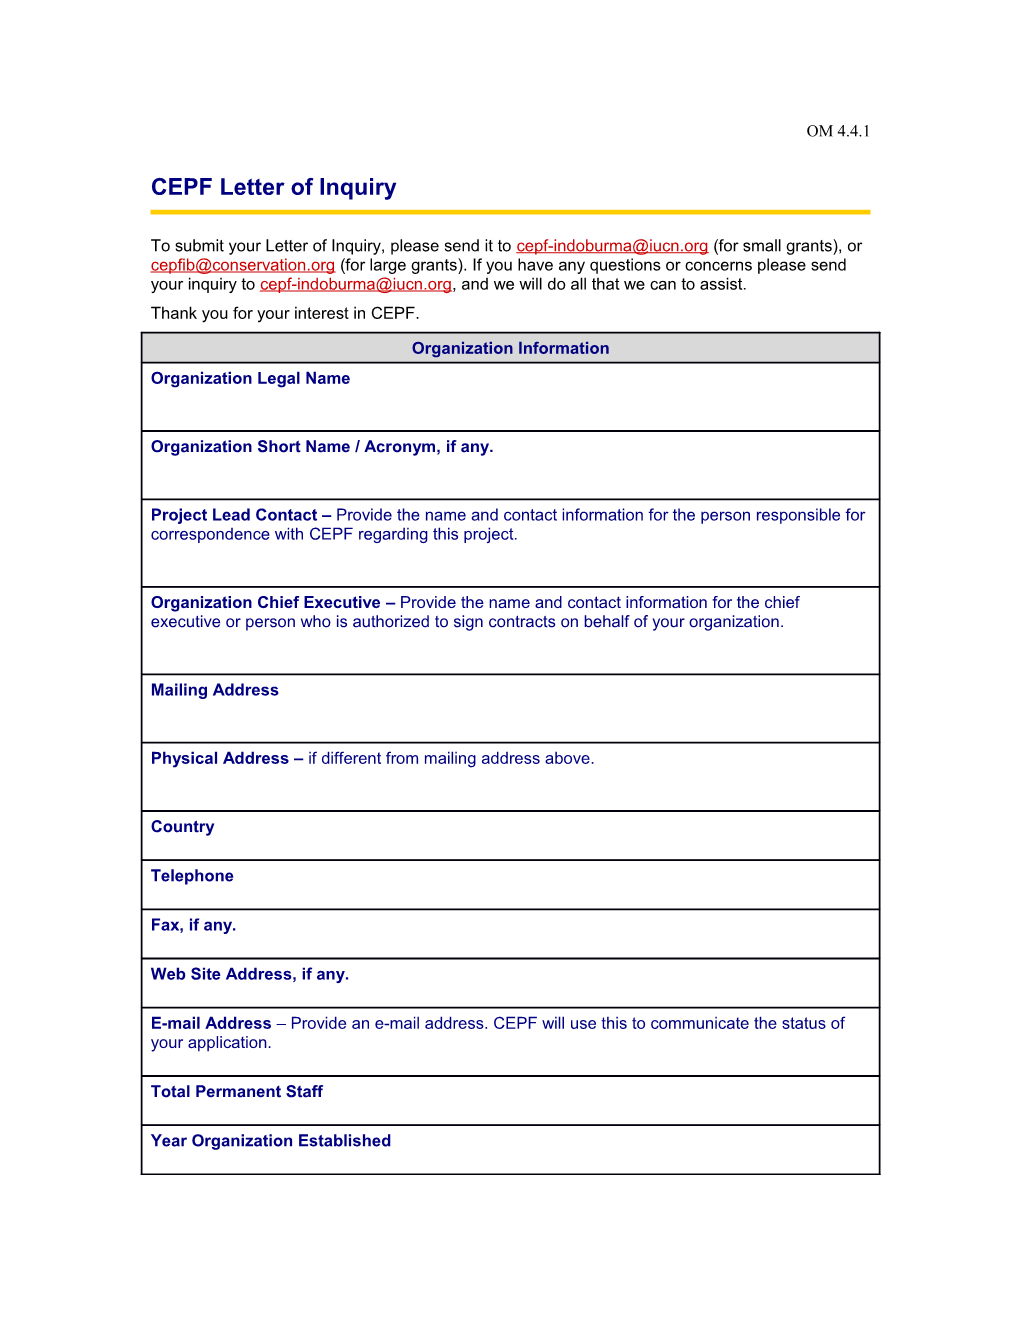 CEPF Letter of Inquiry